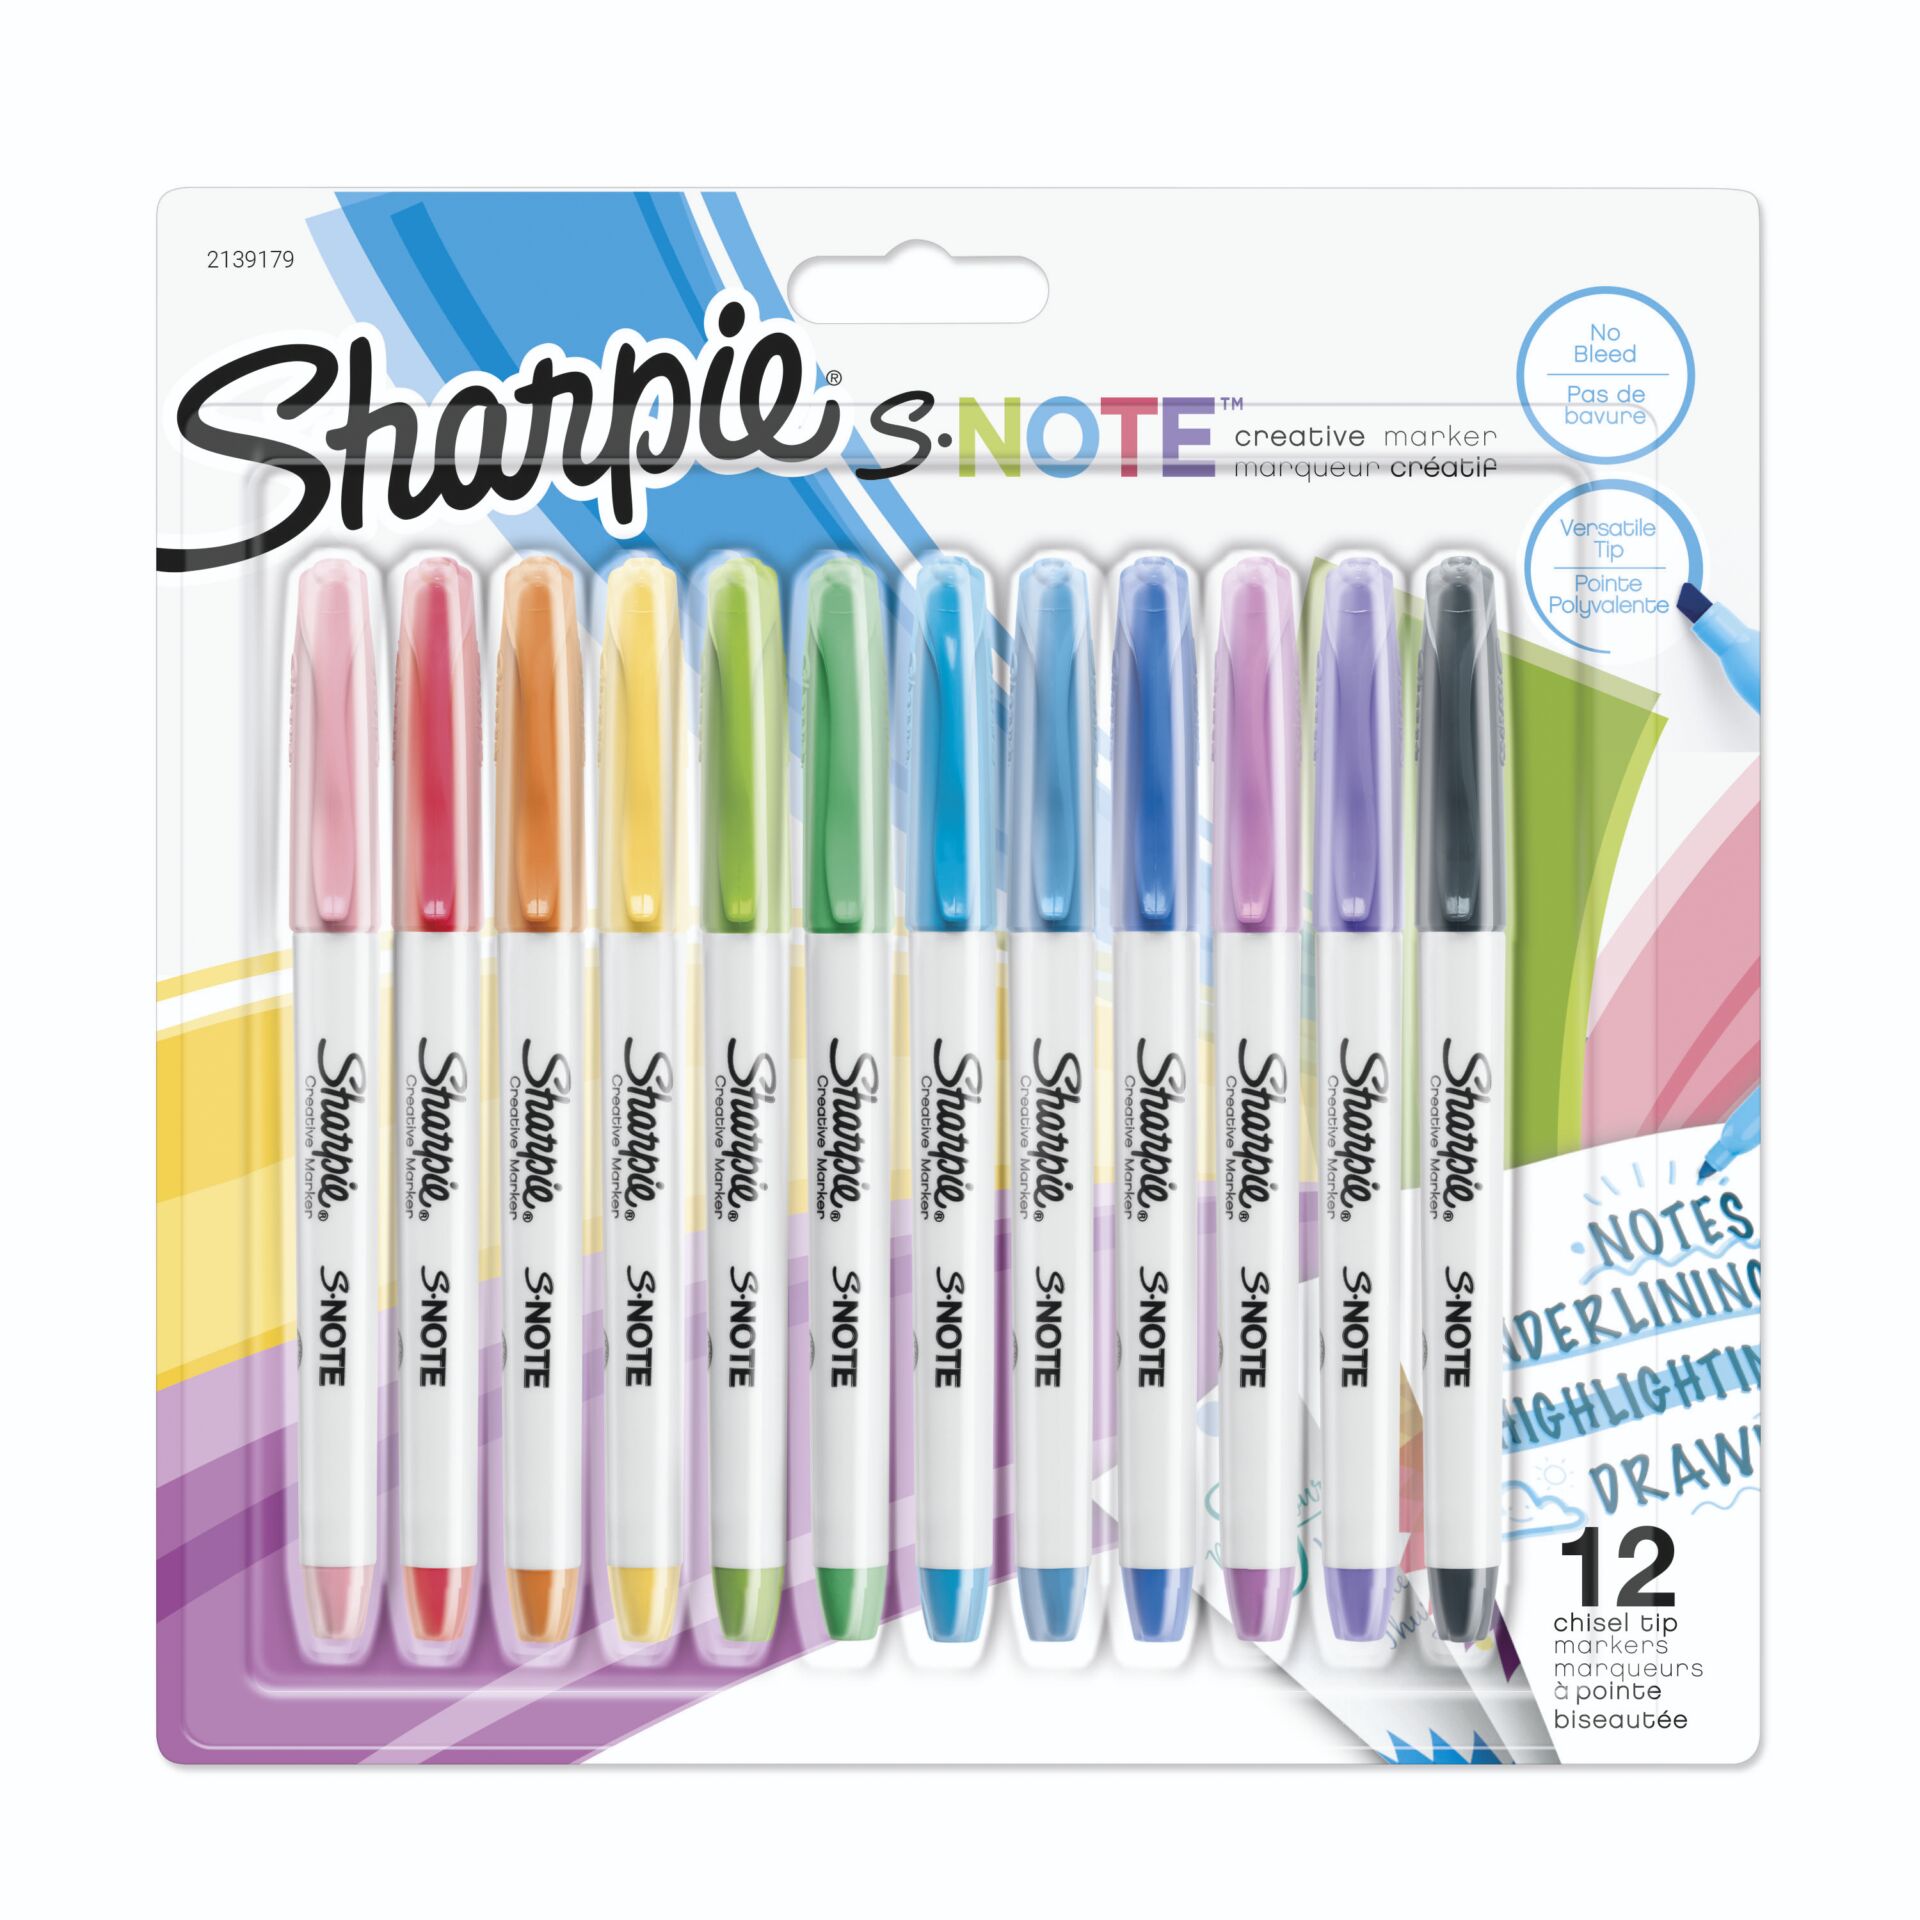 1x12 Sharpie Creatie Marker S-Note 12 colours